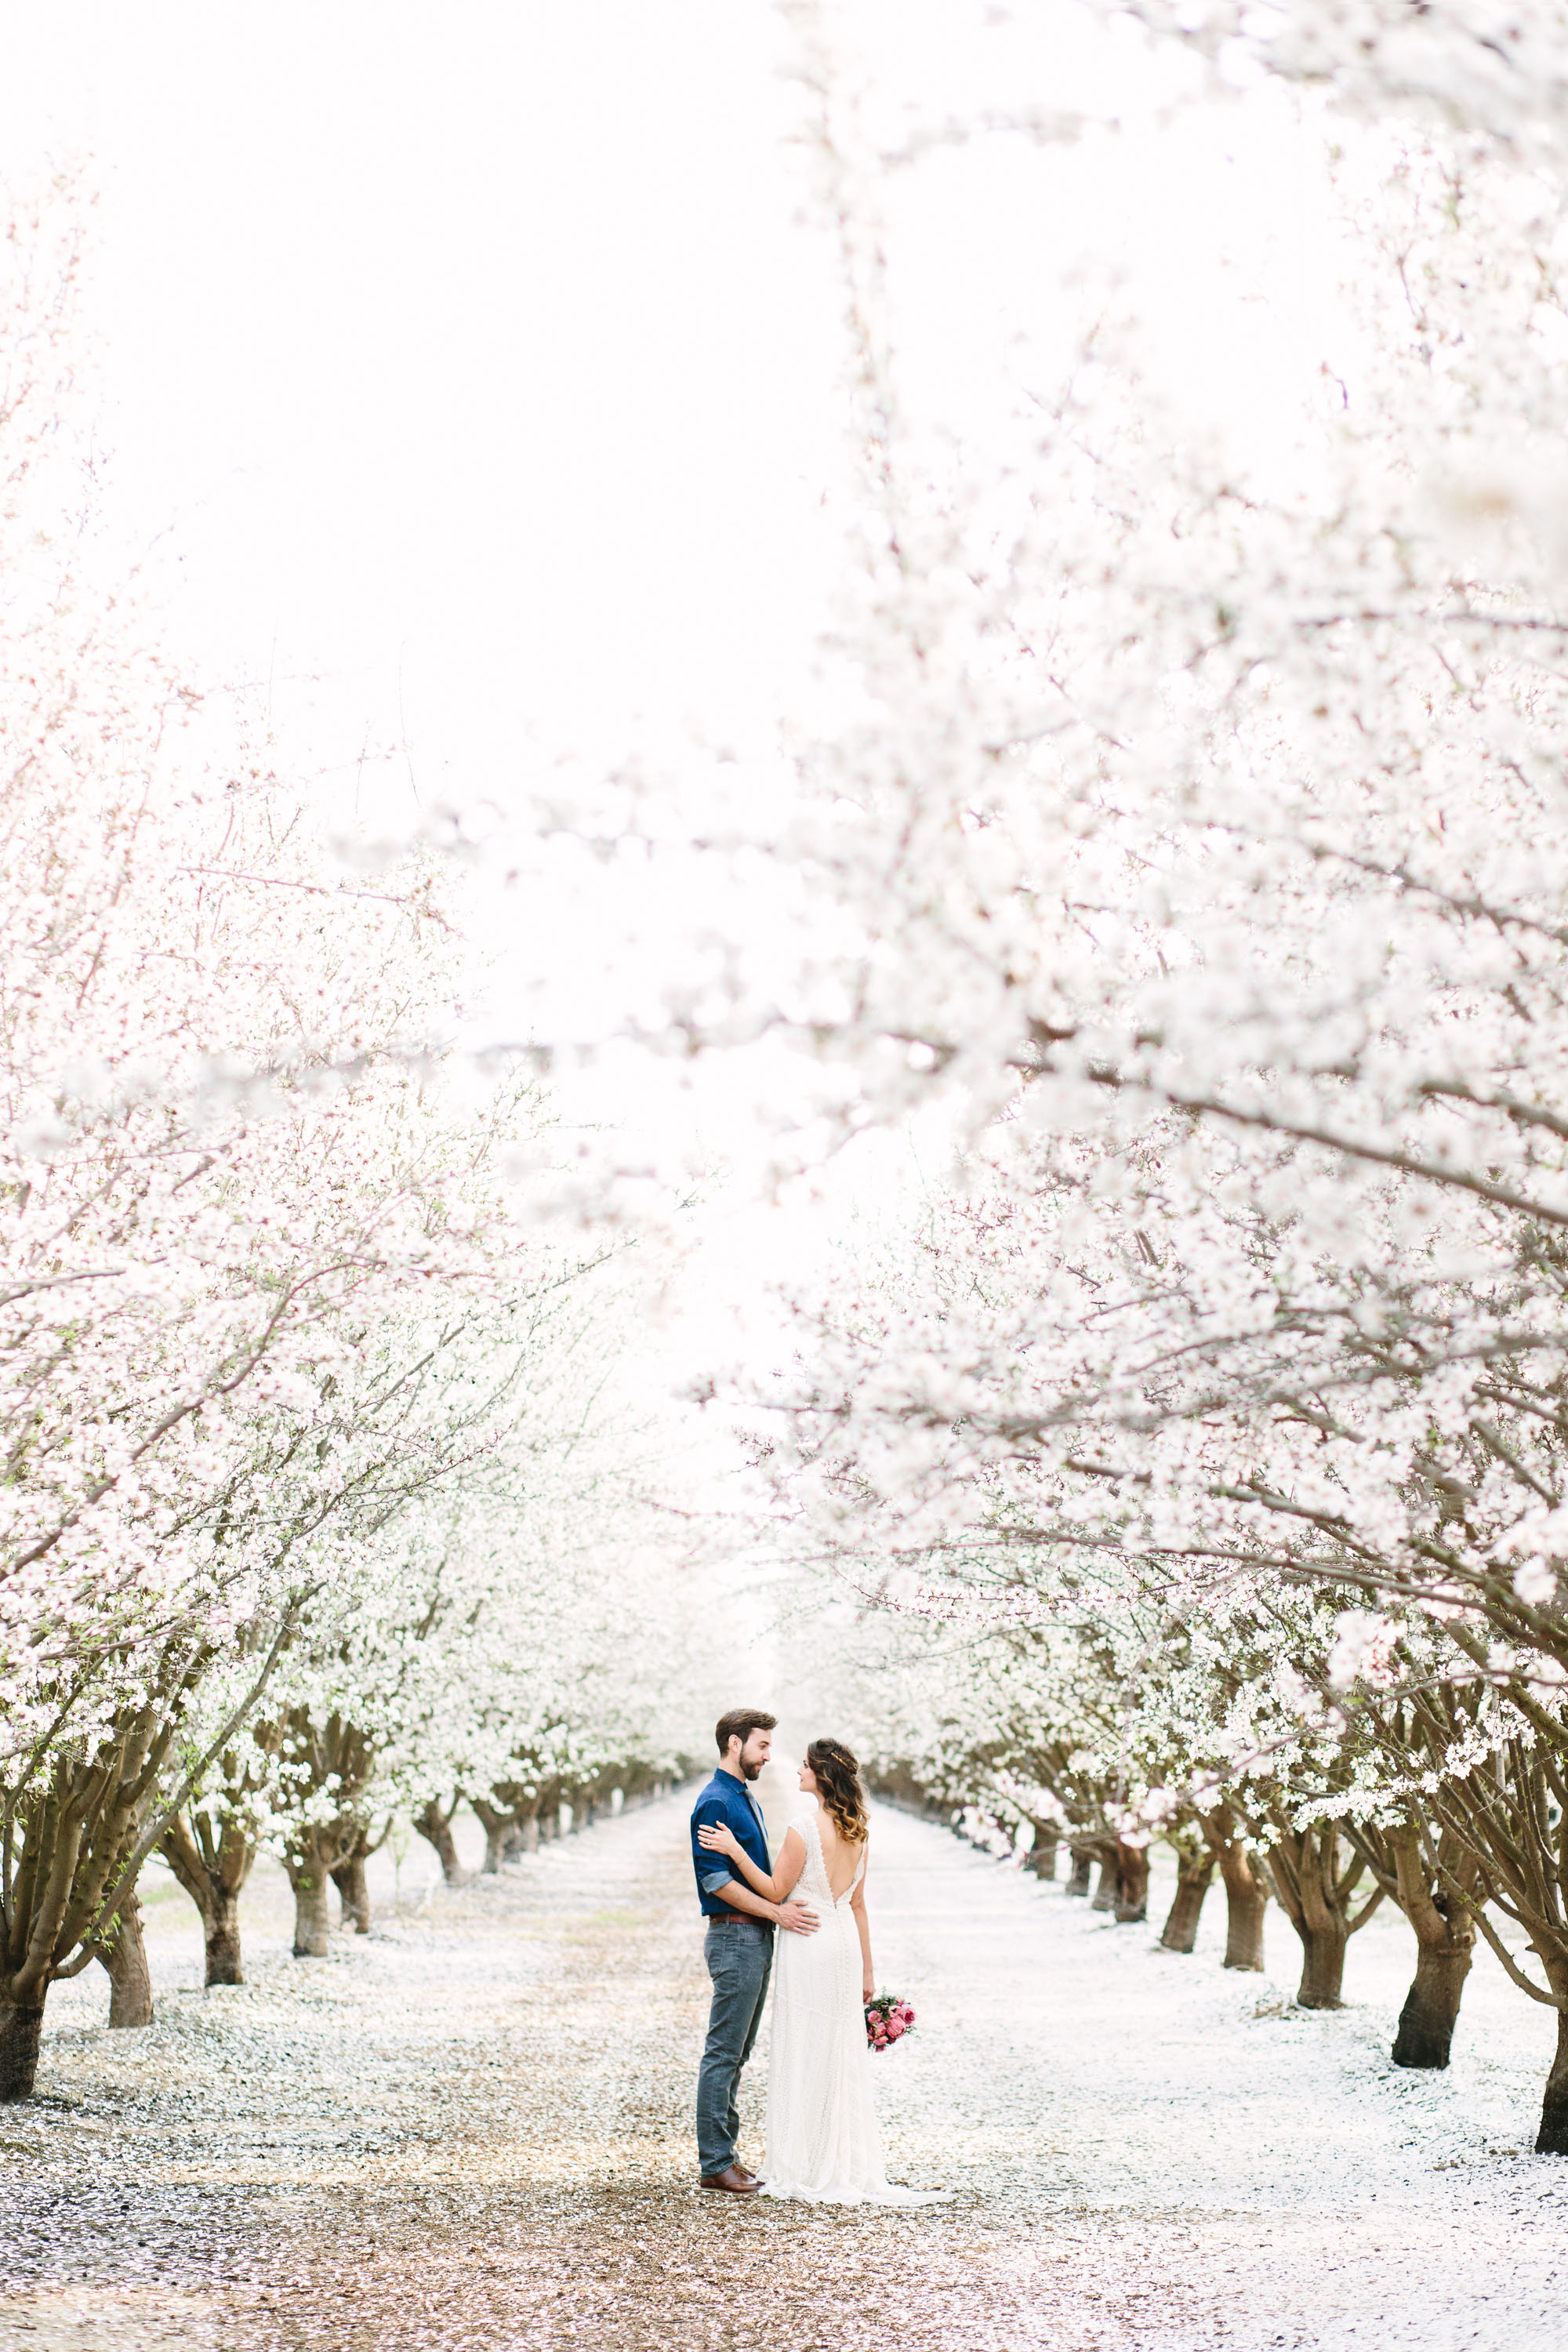 www.marycostaphotography.com | Almond Orchard Wedding Inspiration Blog | 001